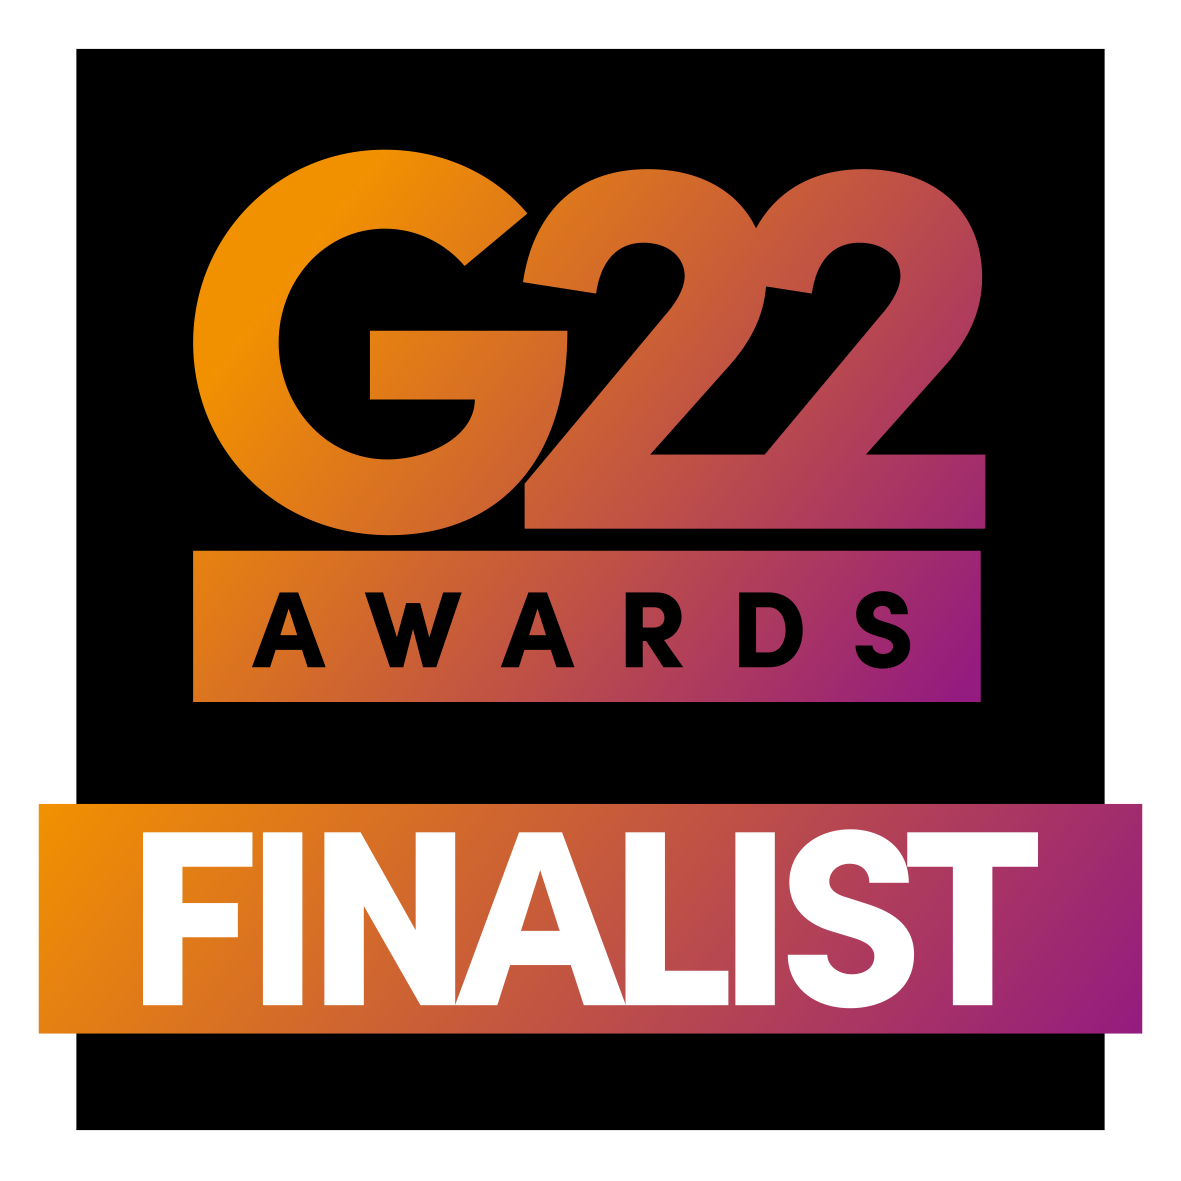 G22 Awards Finalist